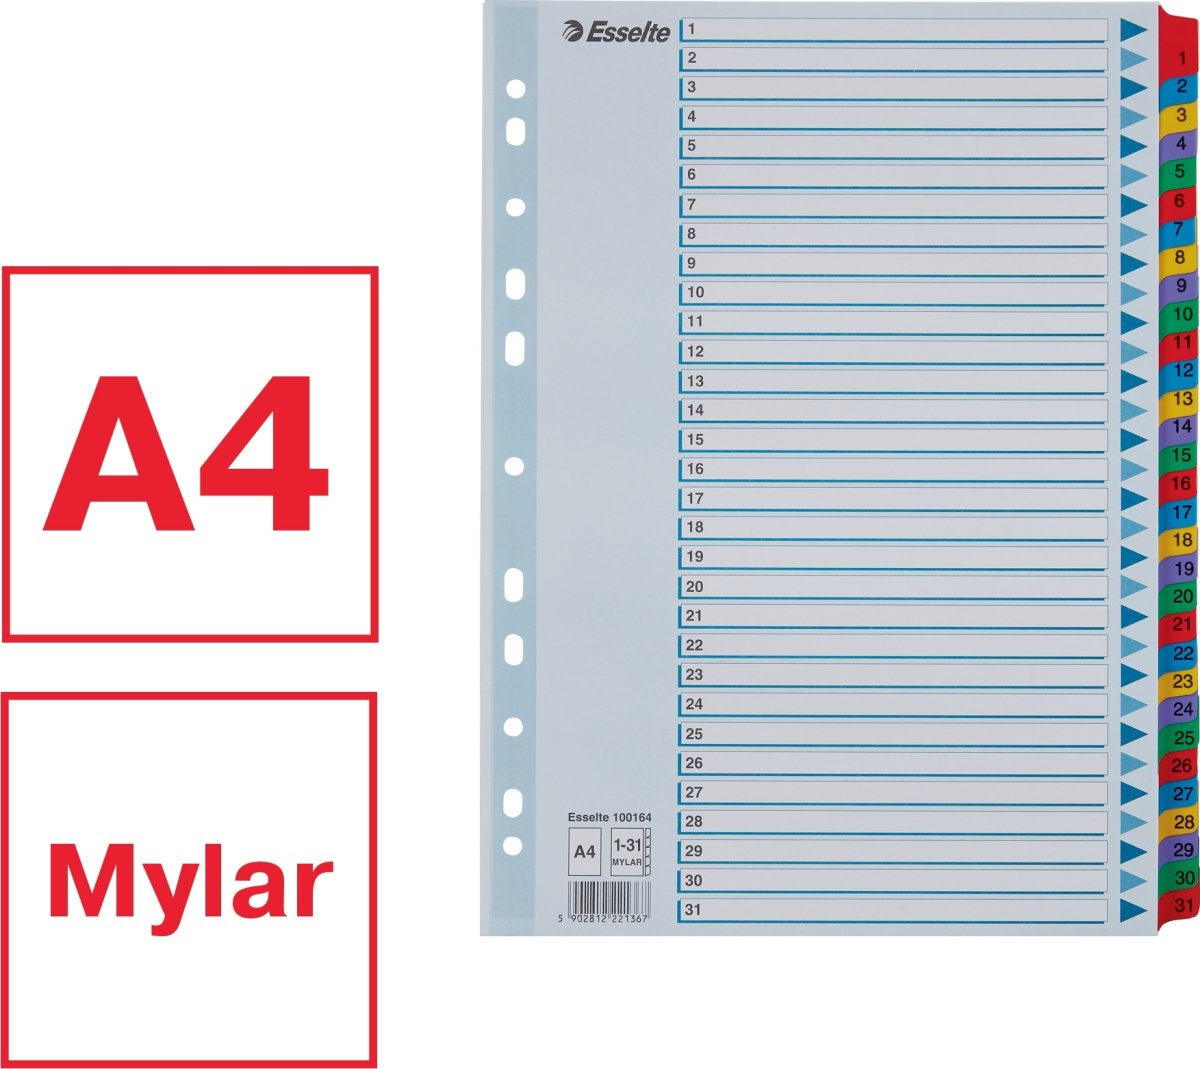 Register Esselte Mylar A4 1-31